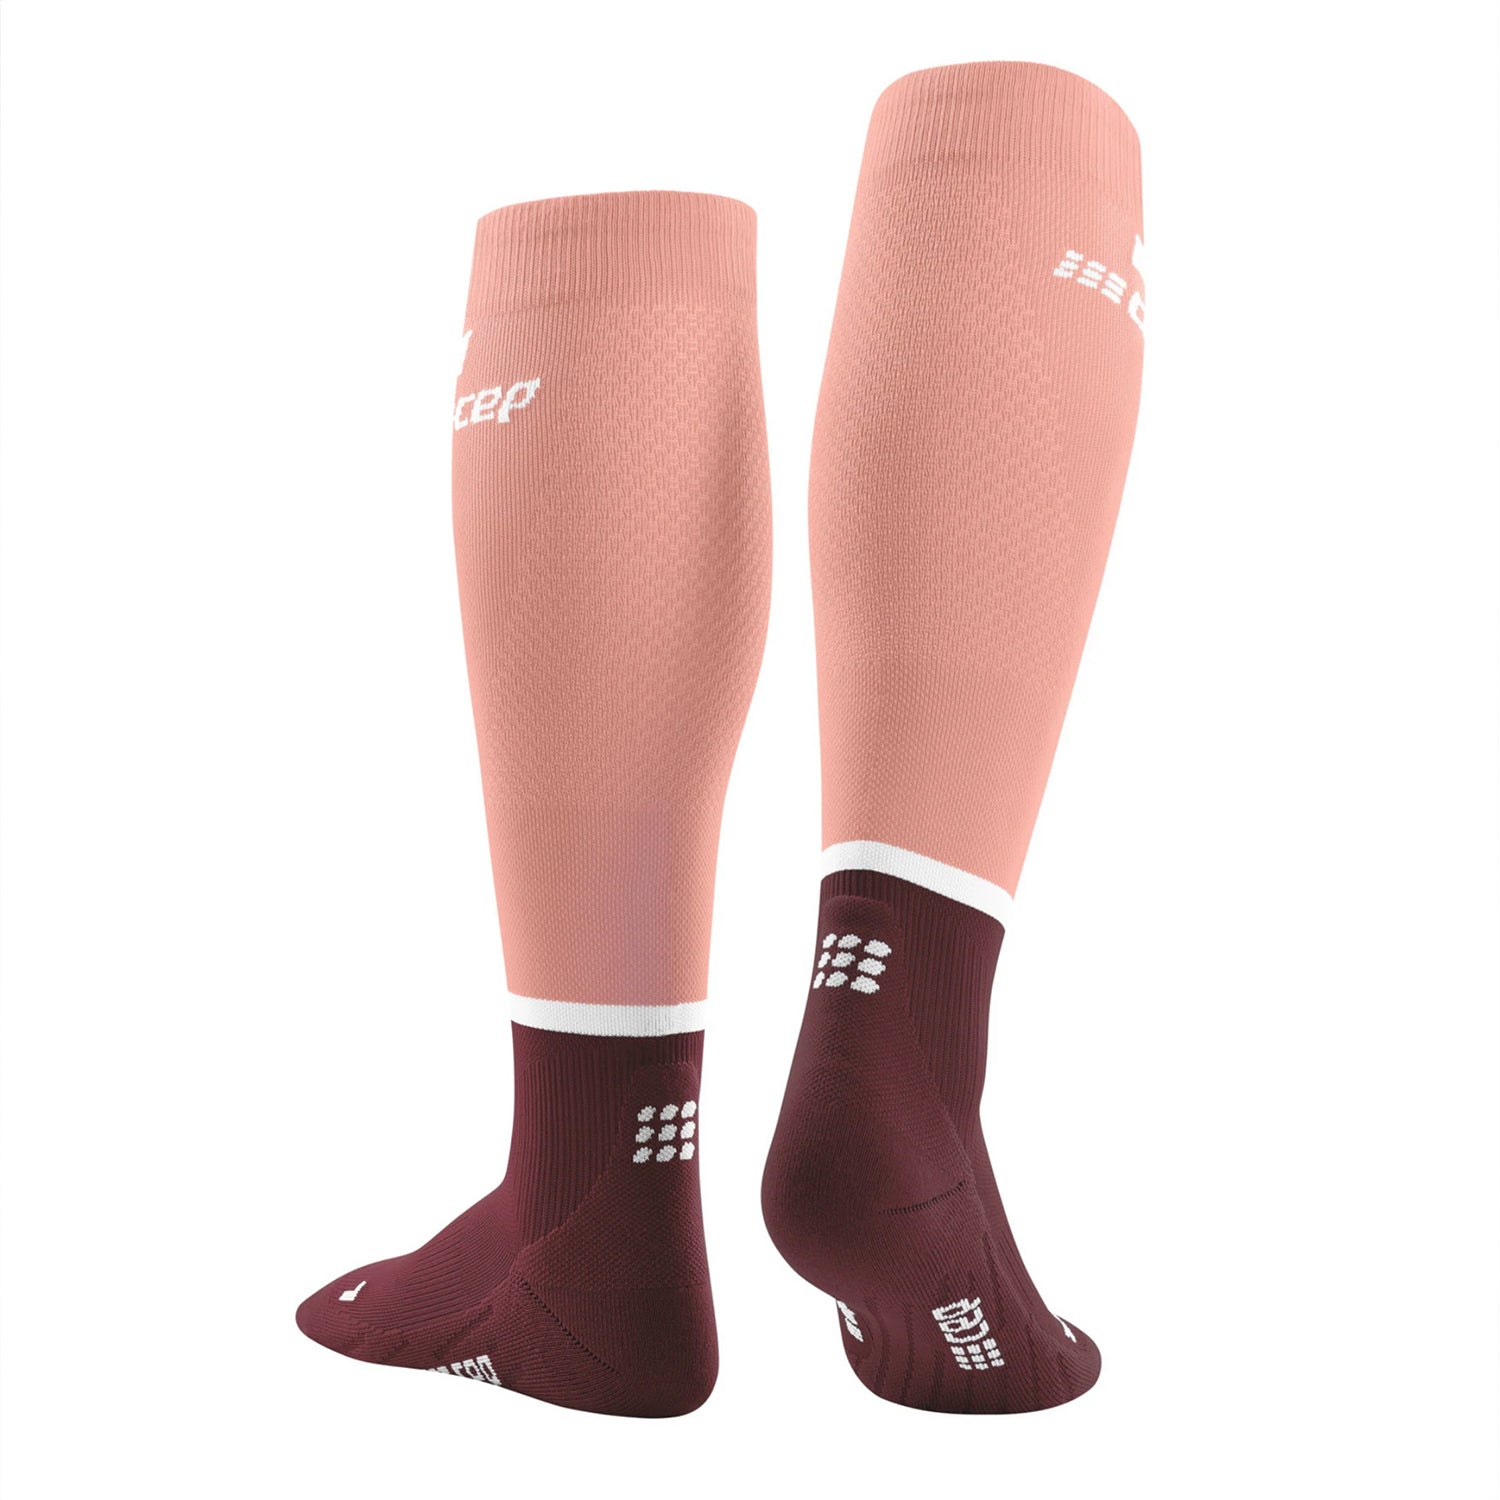 CEP Women's The Run Tall Compression Socks 4.0